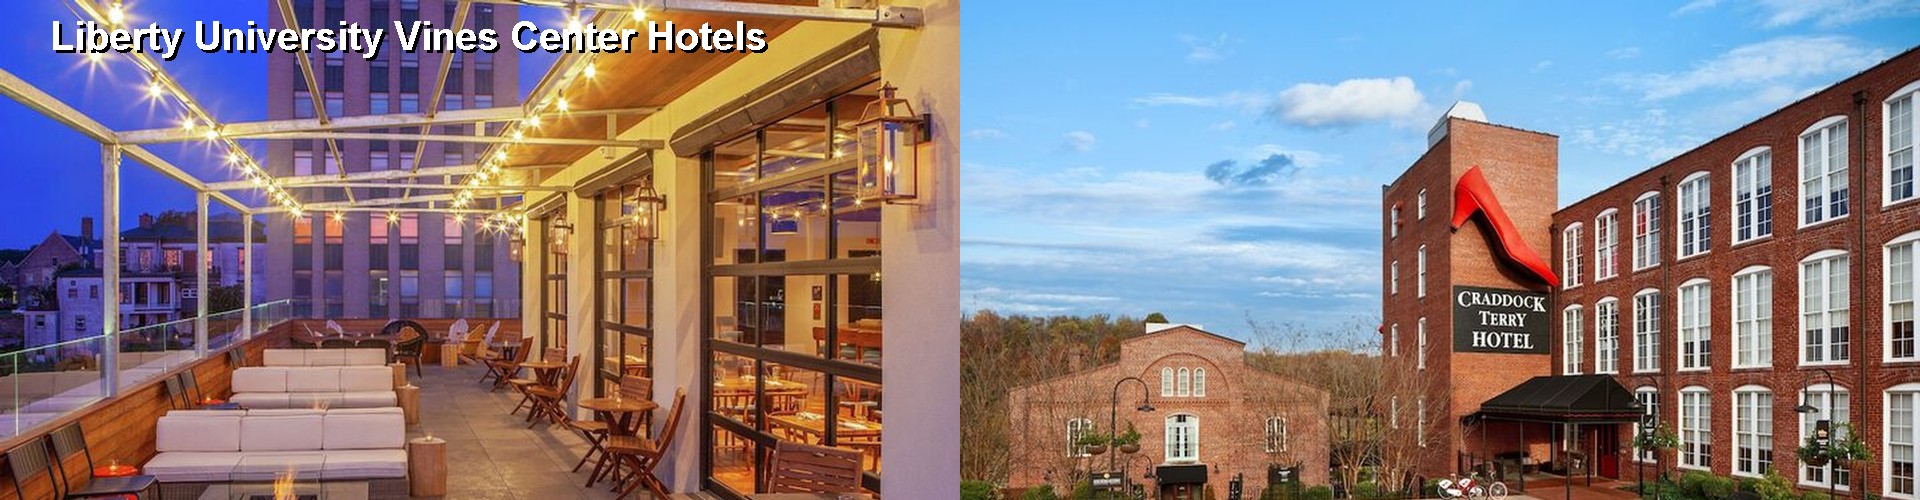 5 Best Hotels near Liberty University Vines Center